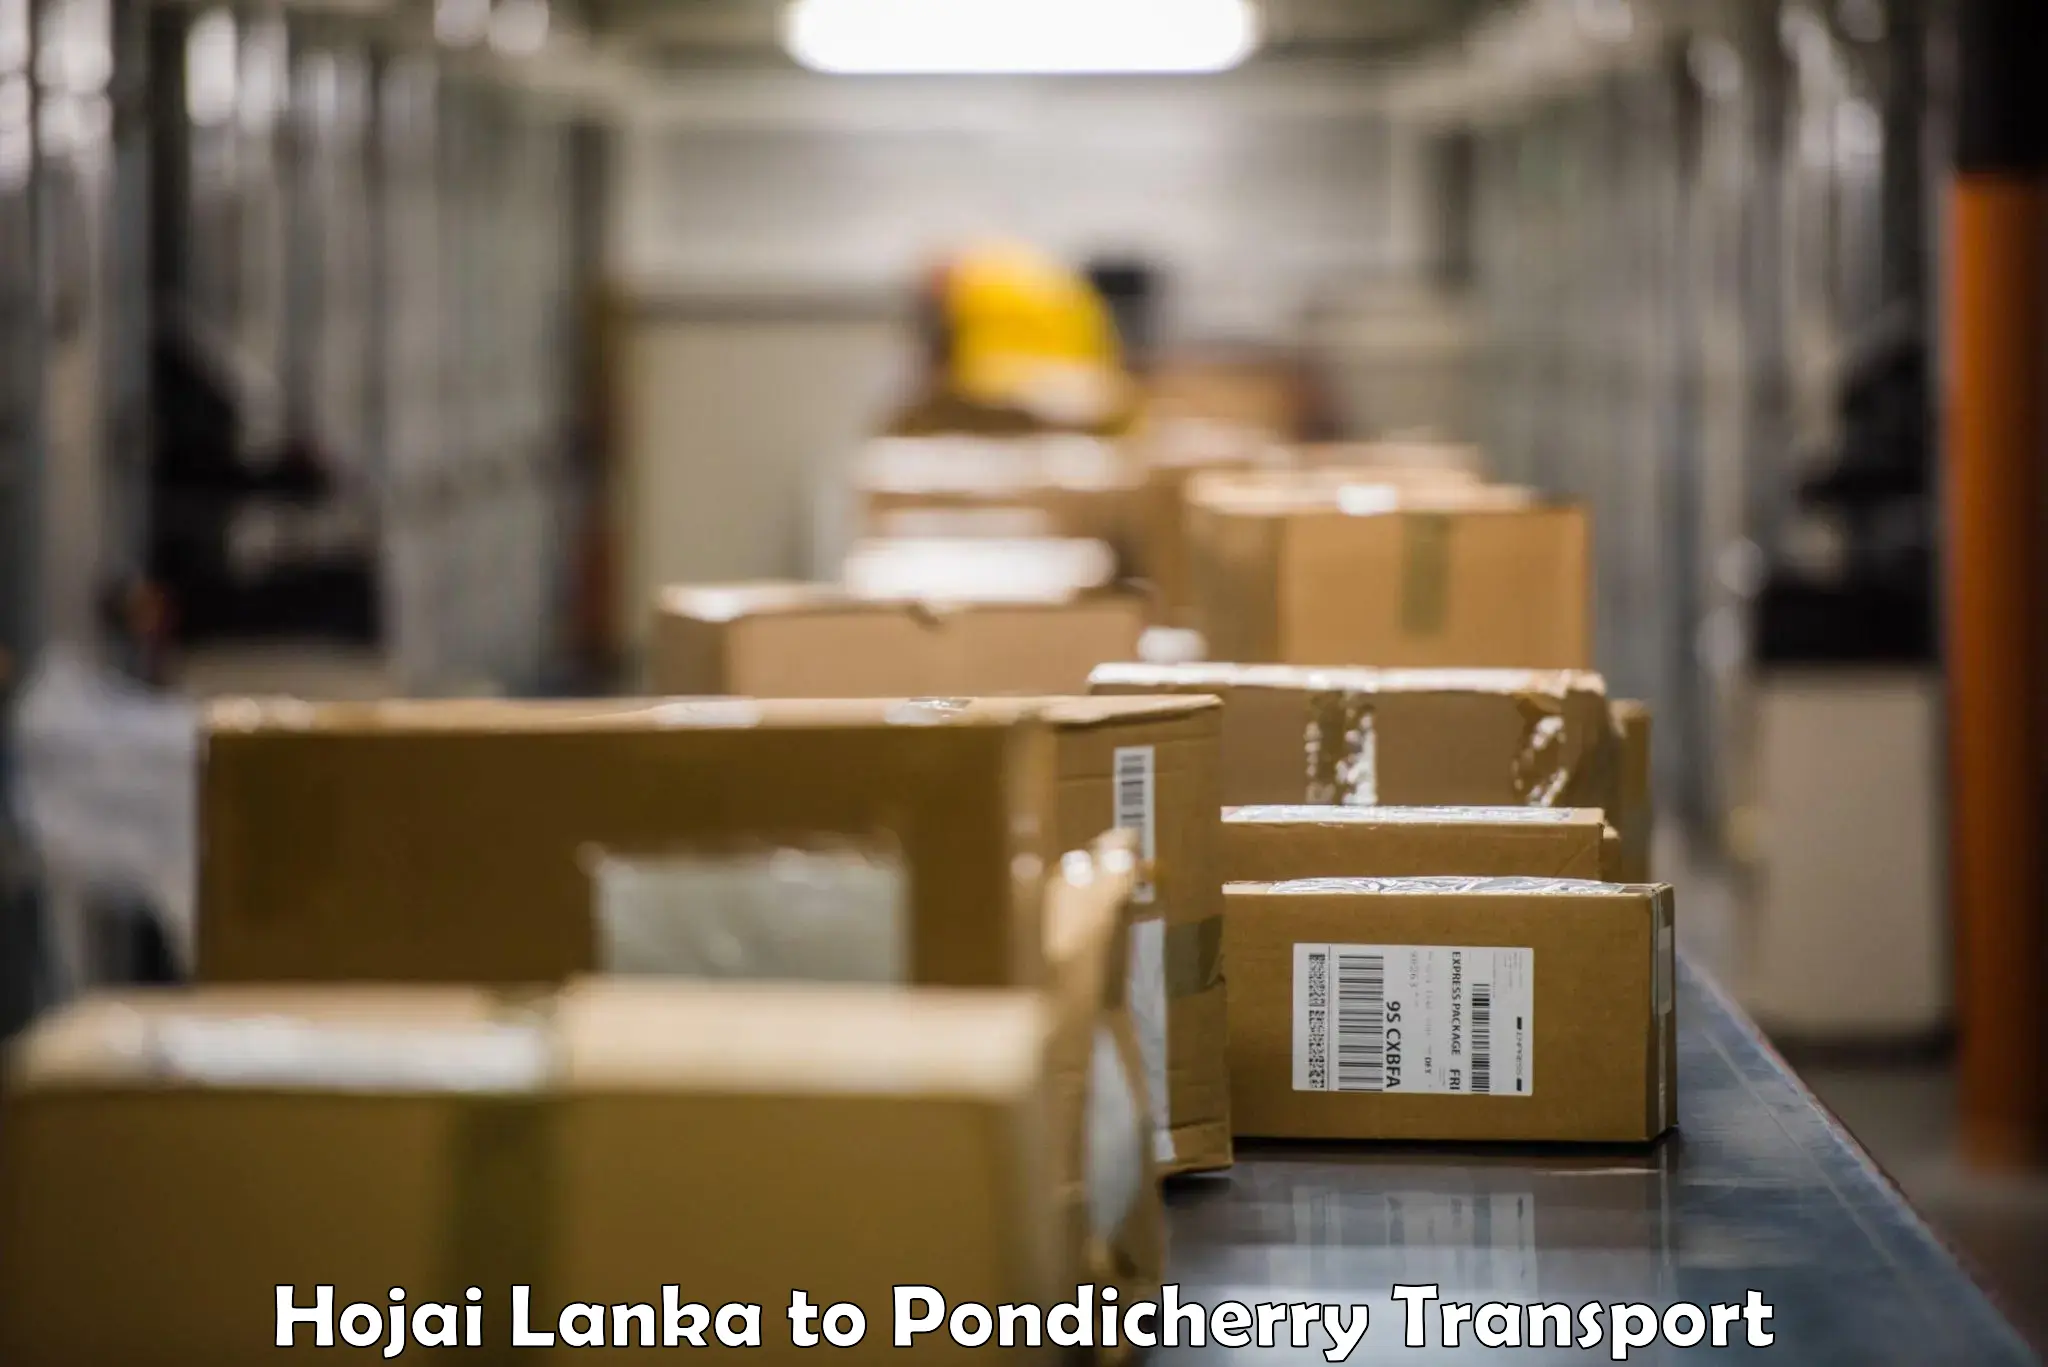 Delivery service Hojai Lanka to Pondicherry